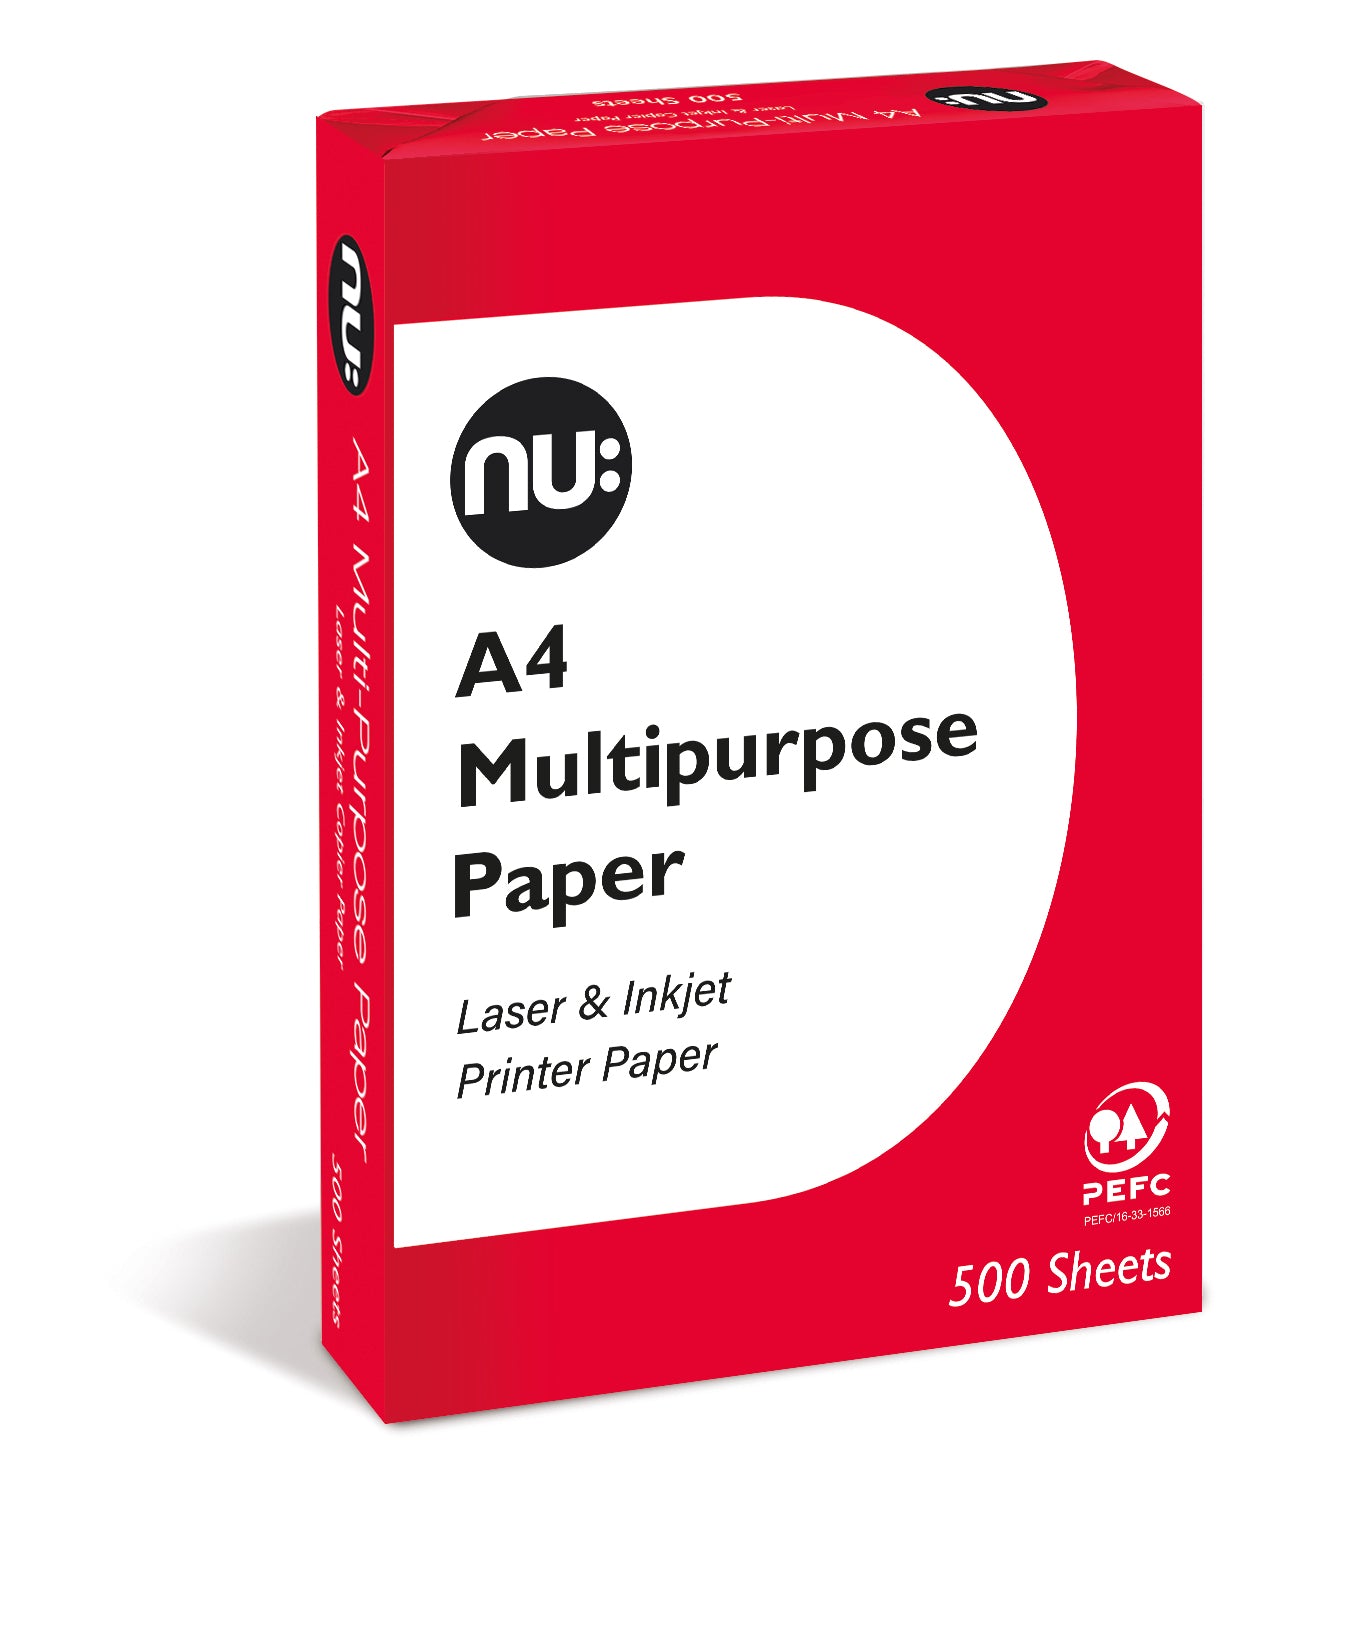 nu: Multipurpose Paper - 500 sheets